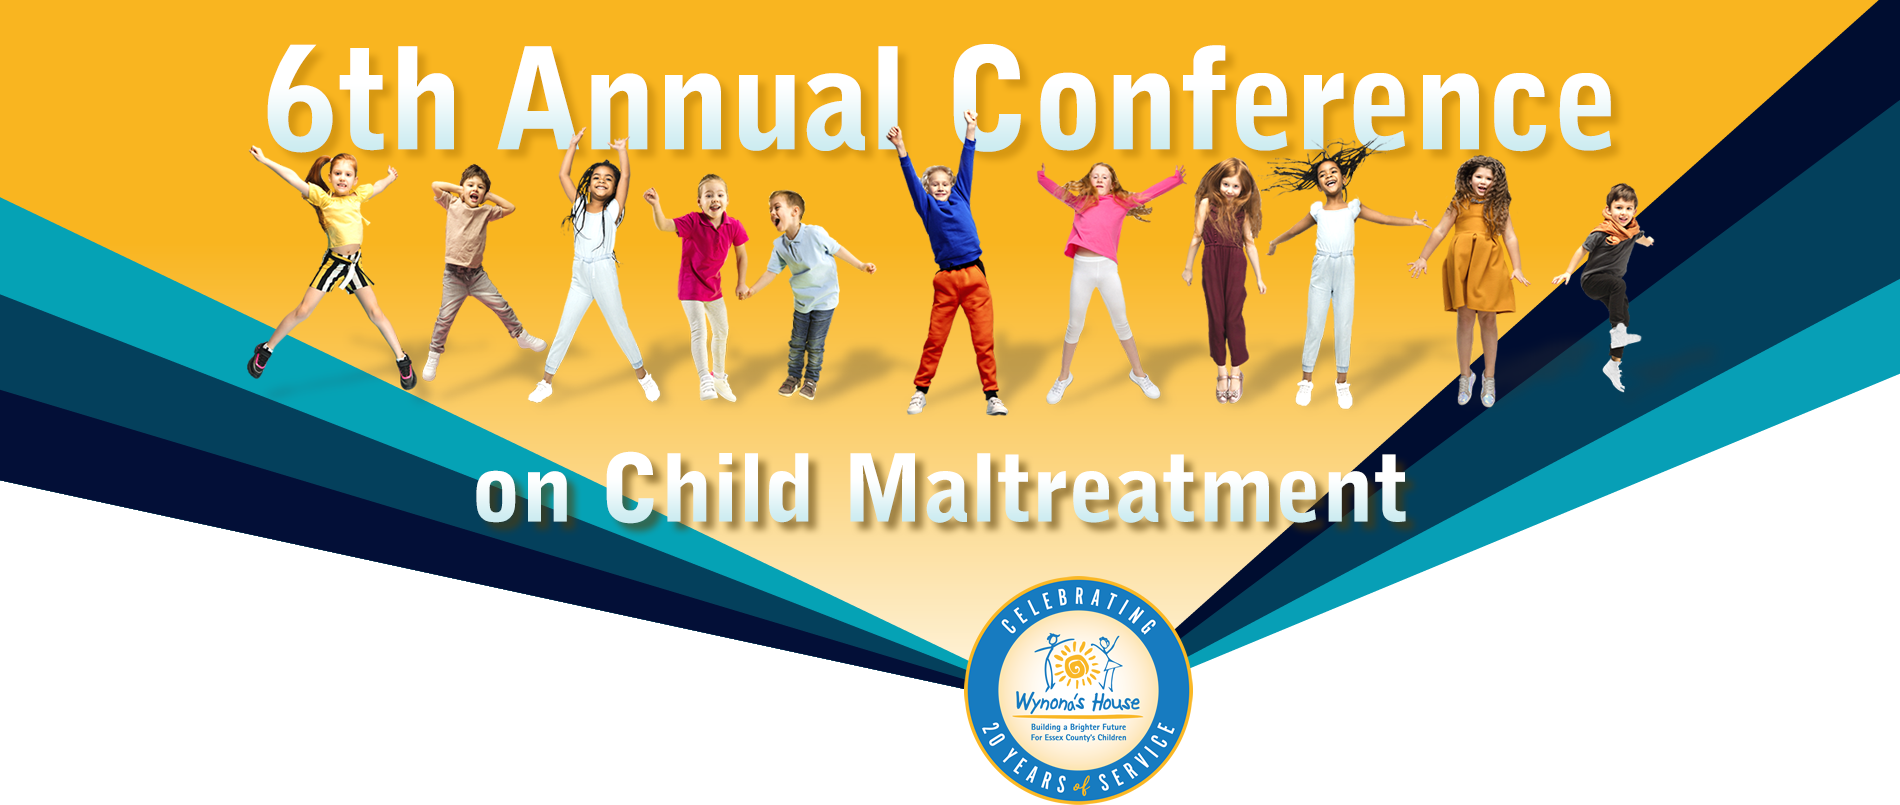 6th Annual Conference on Child Maltreatment | Header